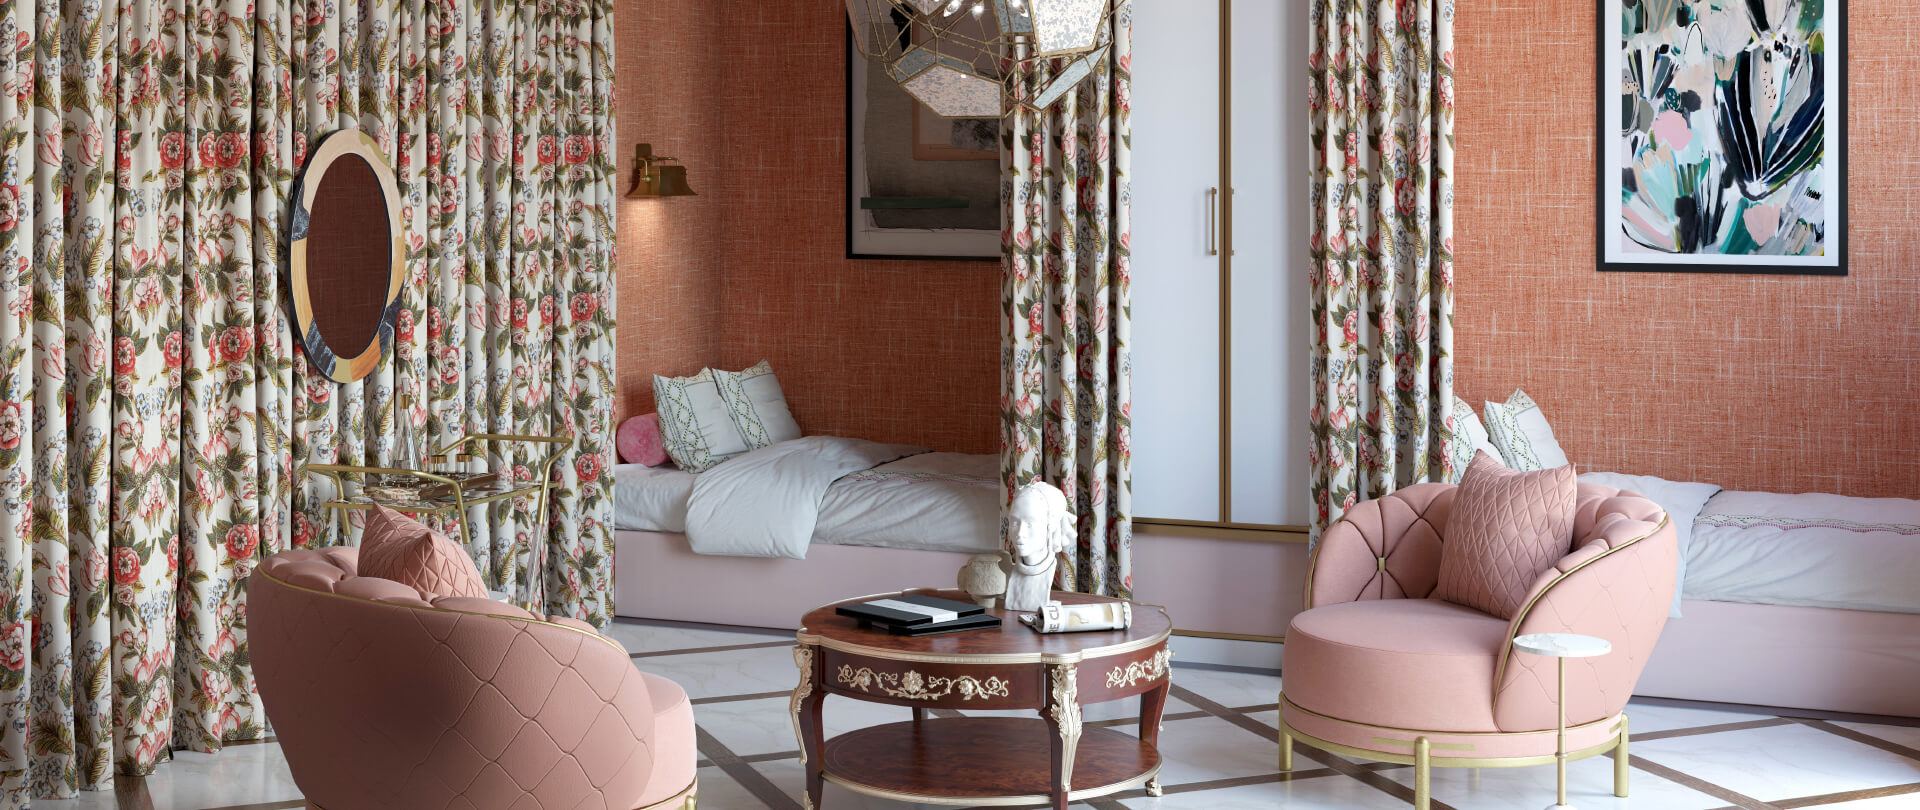 3D Interior Rendering of The Guest Bedroom Designed by Corey Damen Jankins